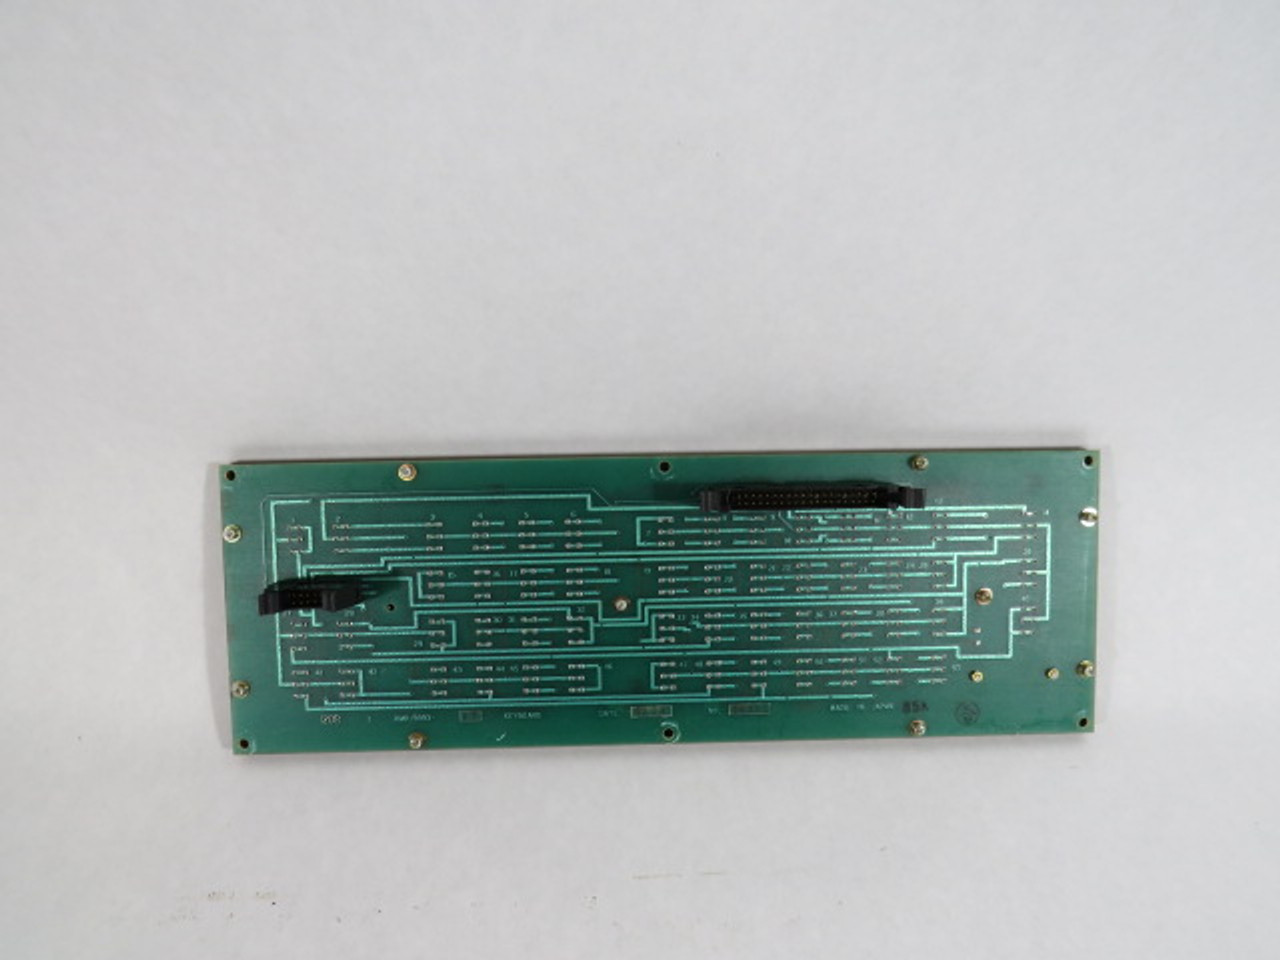 Yaskawa HMK-9993-47 LX3 CNC Keyboard Input Operator Panel USED